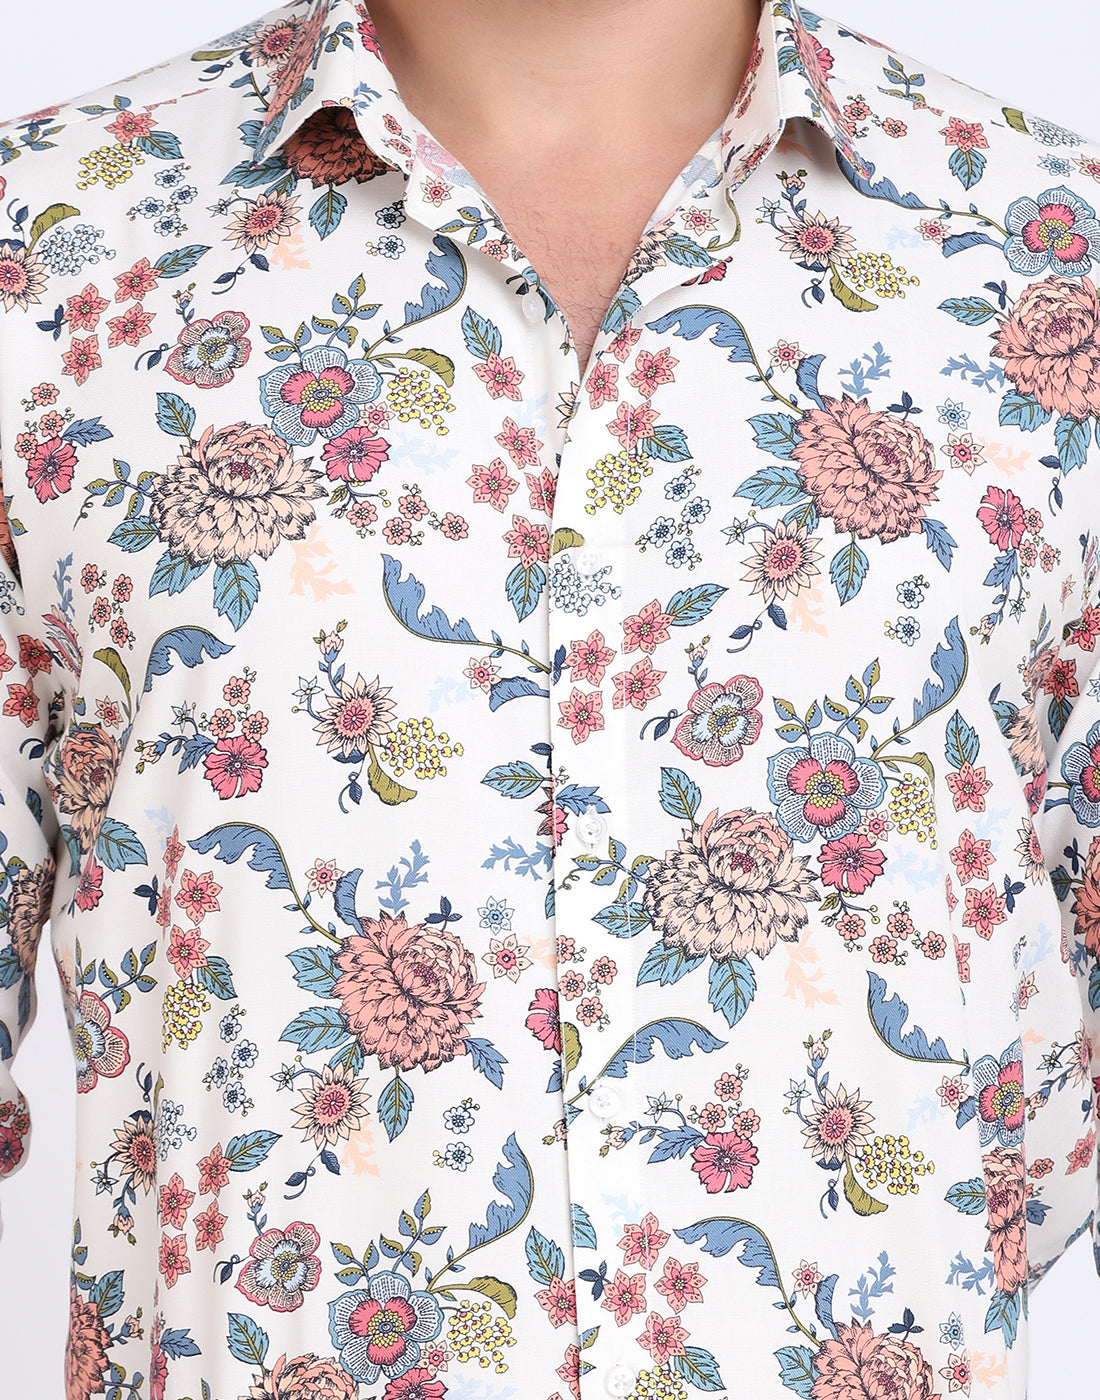 Vintage Floral Printed Casual Shirt